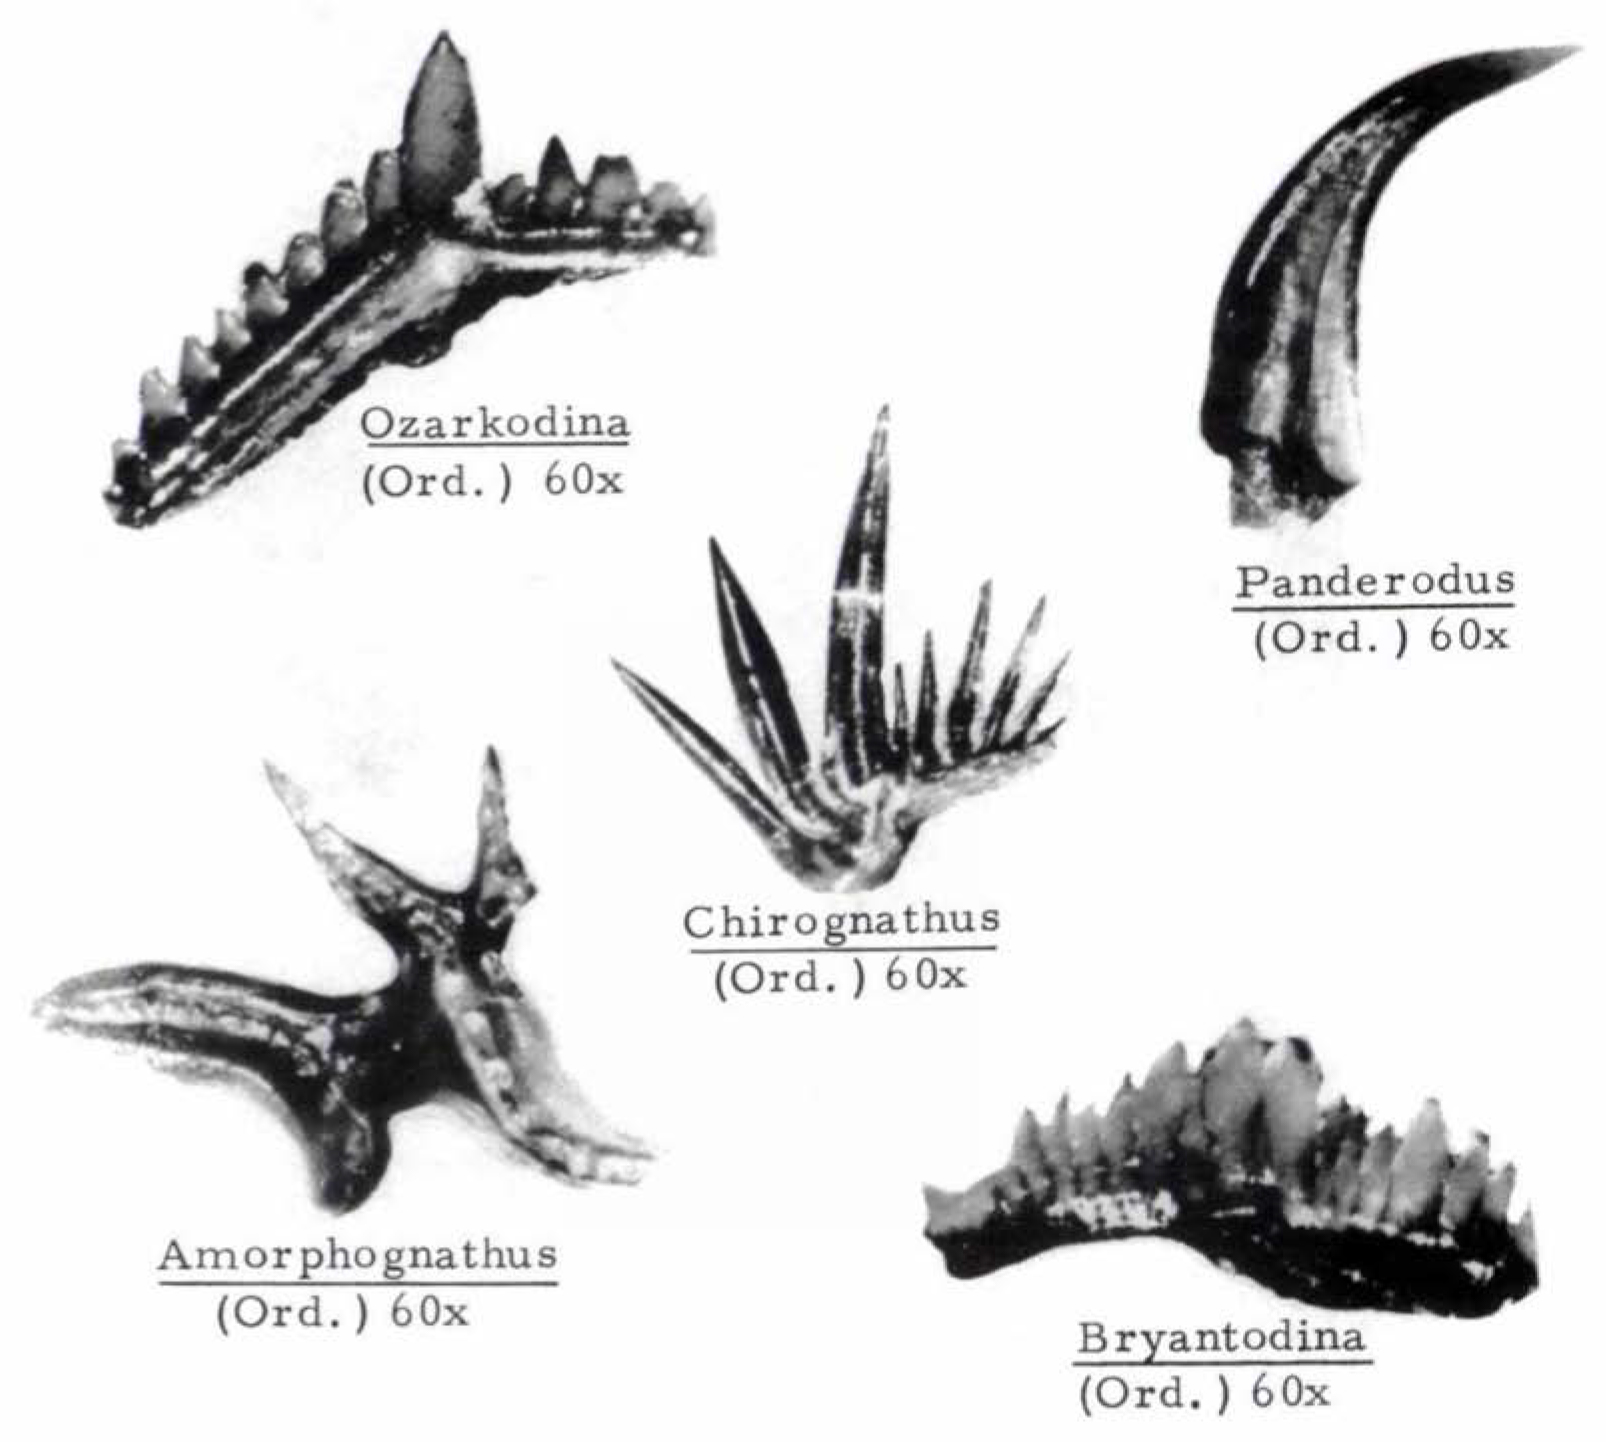 Several fossil conodont elements from Ordovician bedrock in southeastern Minnesota.